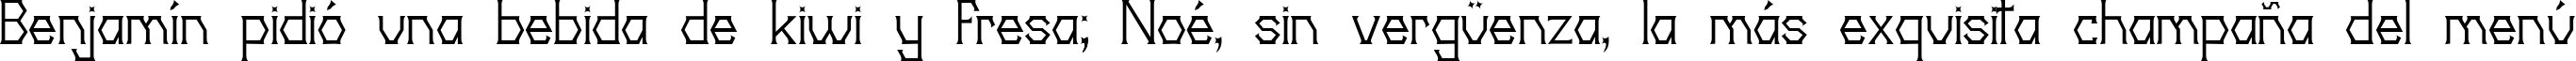 Пример написания шрифтом 20th Centenary Faux текста на испанском